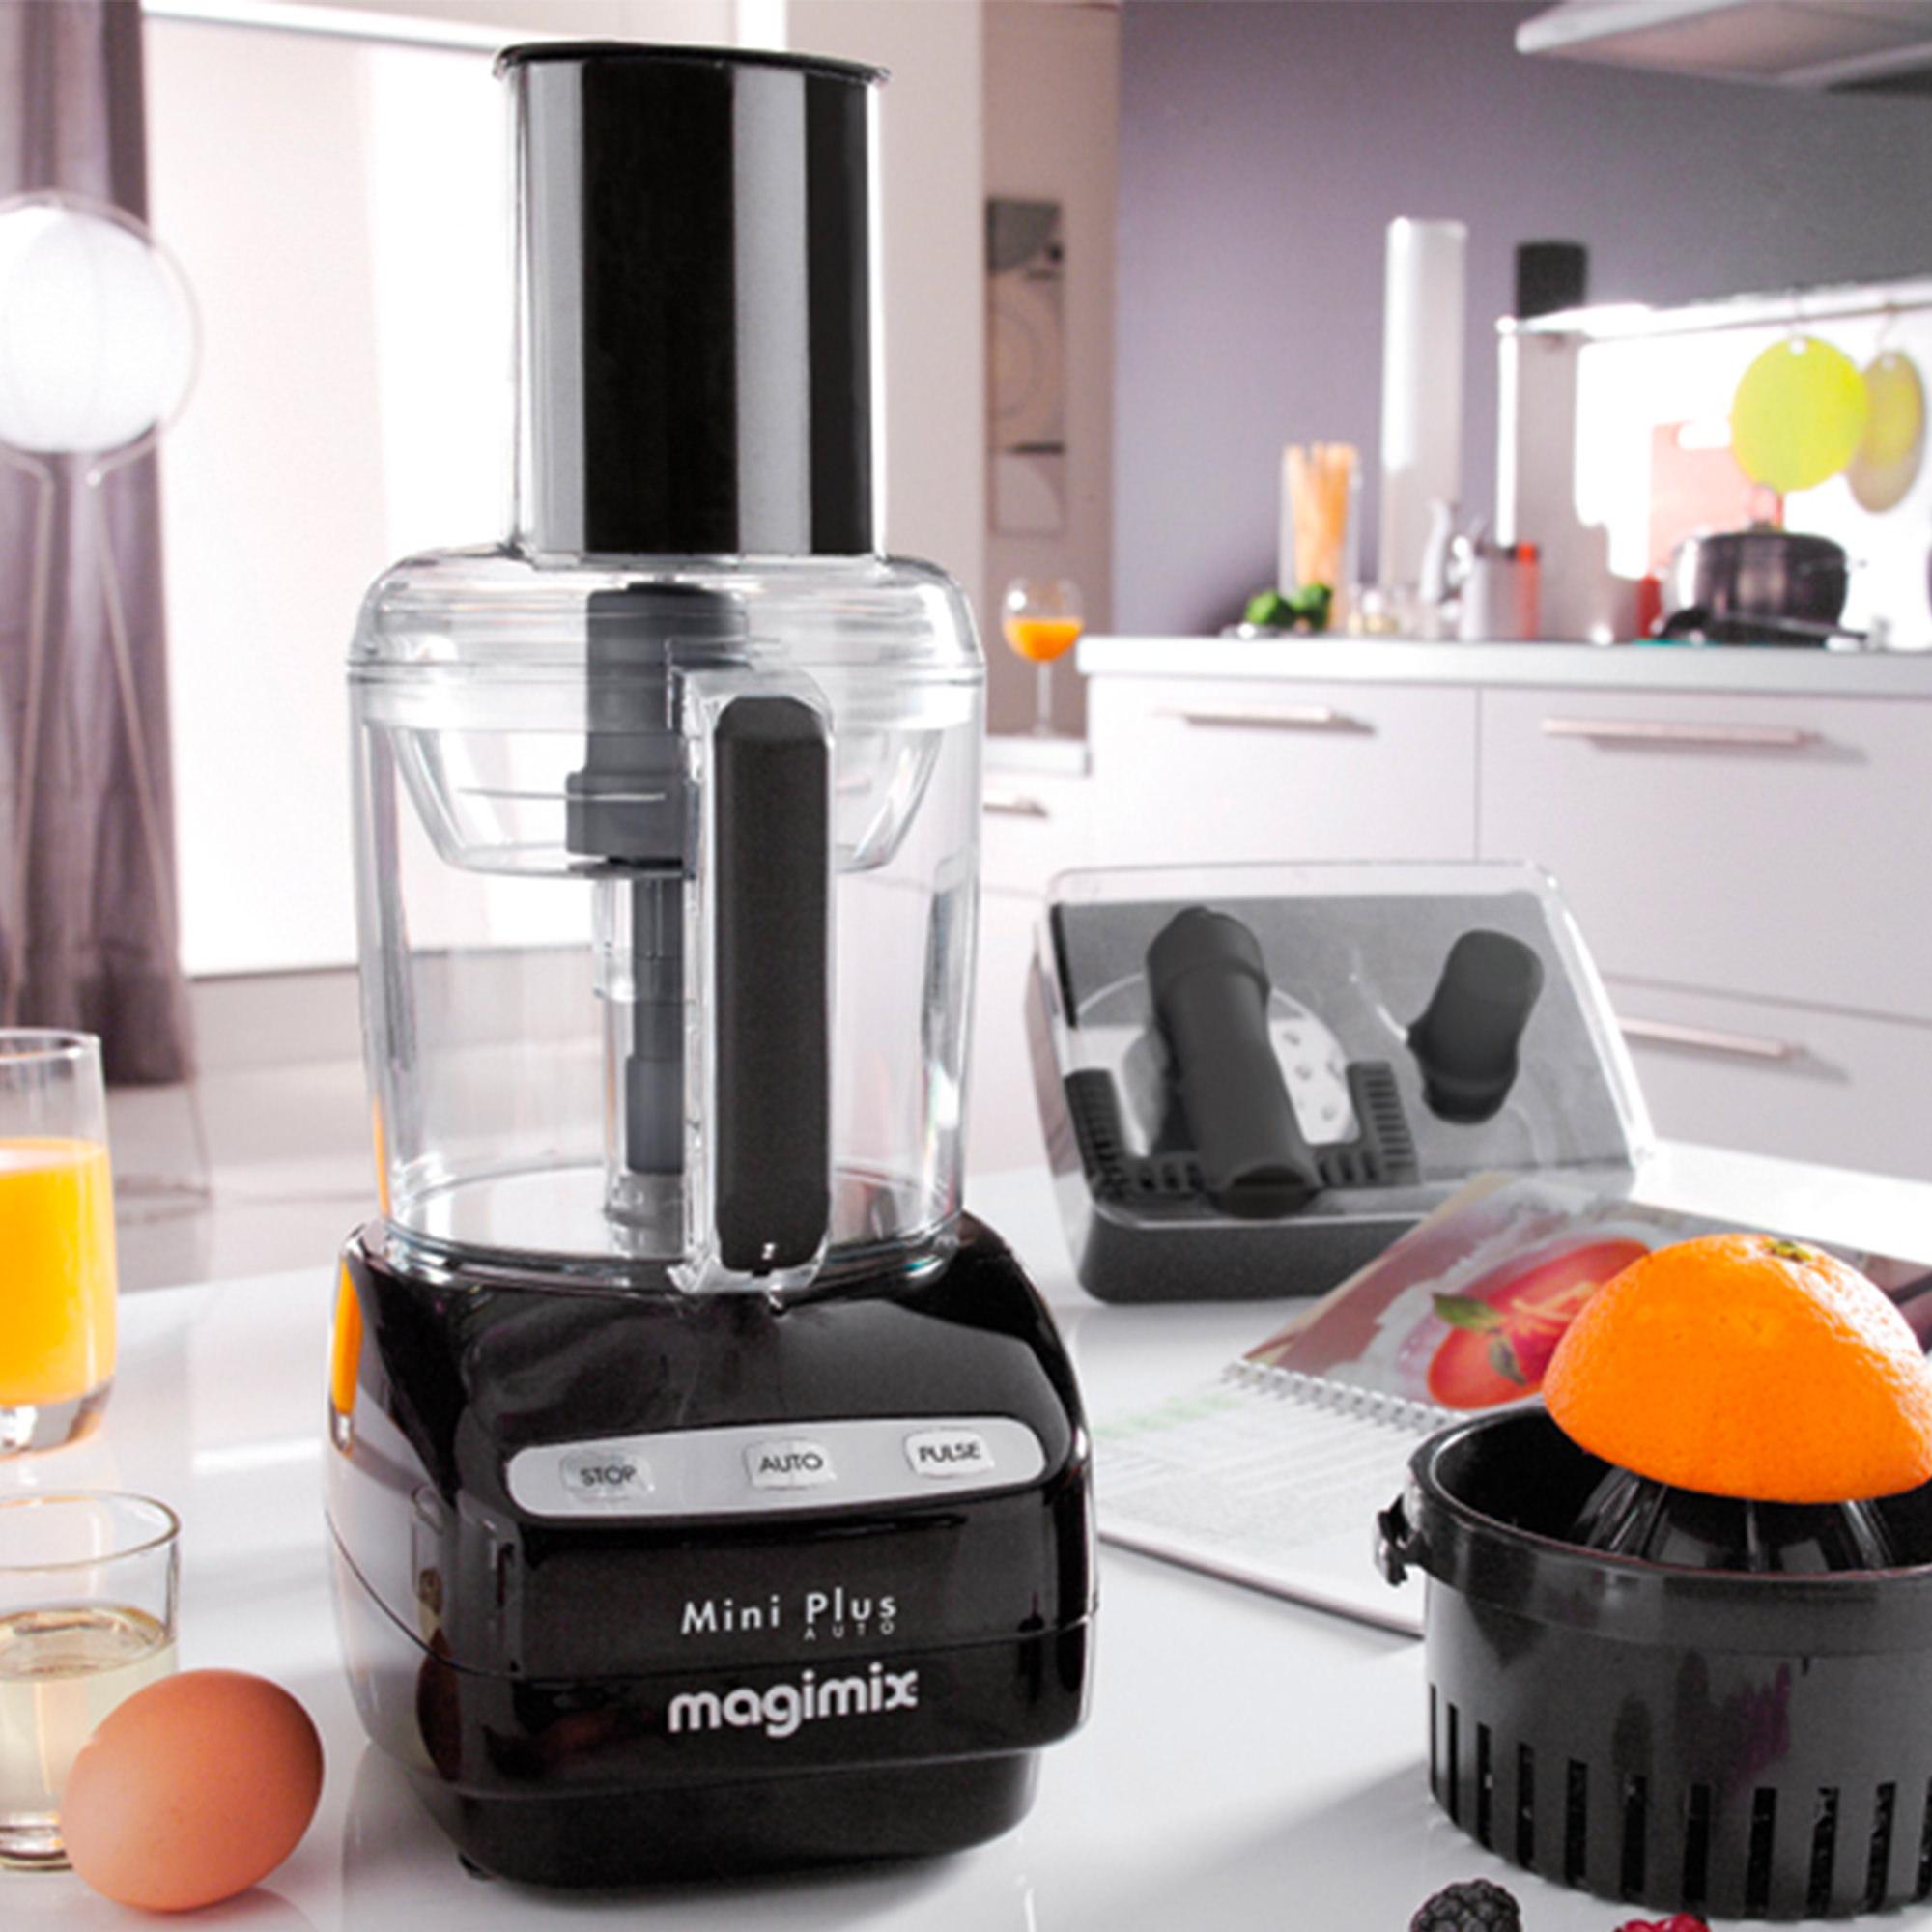 Magimix Le Mini Plus Food Processor Black Image 4